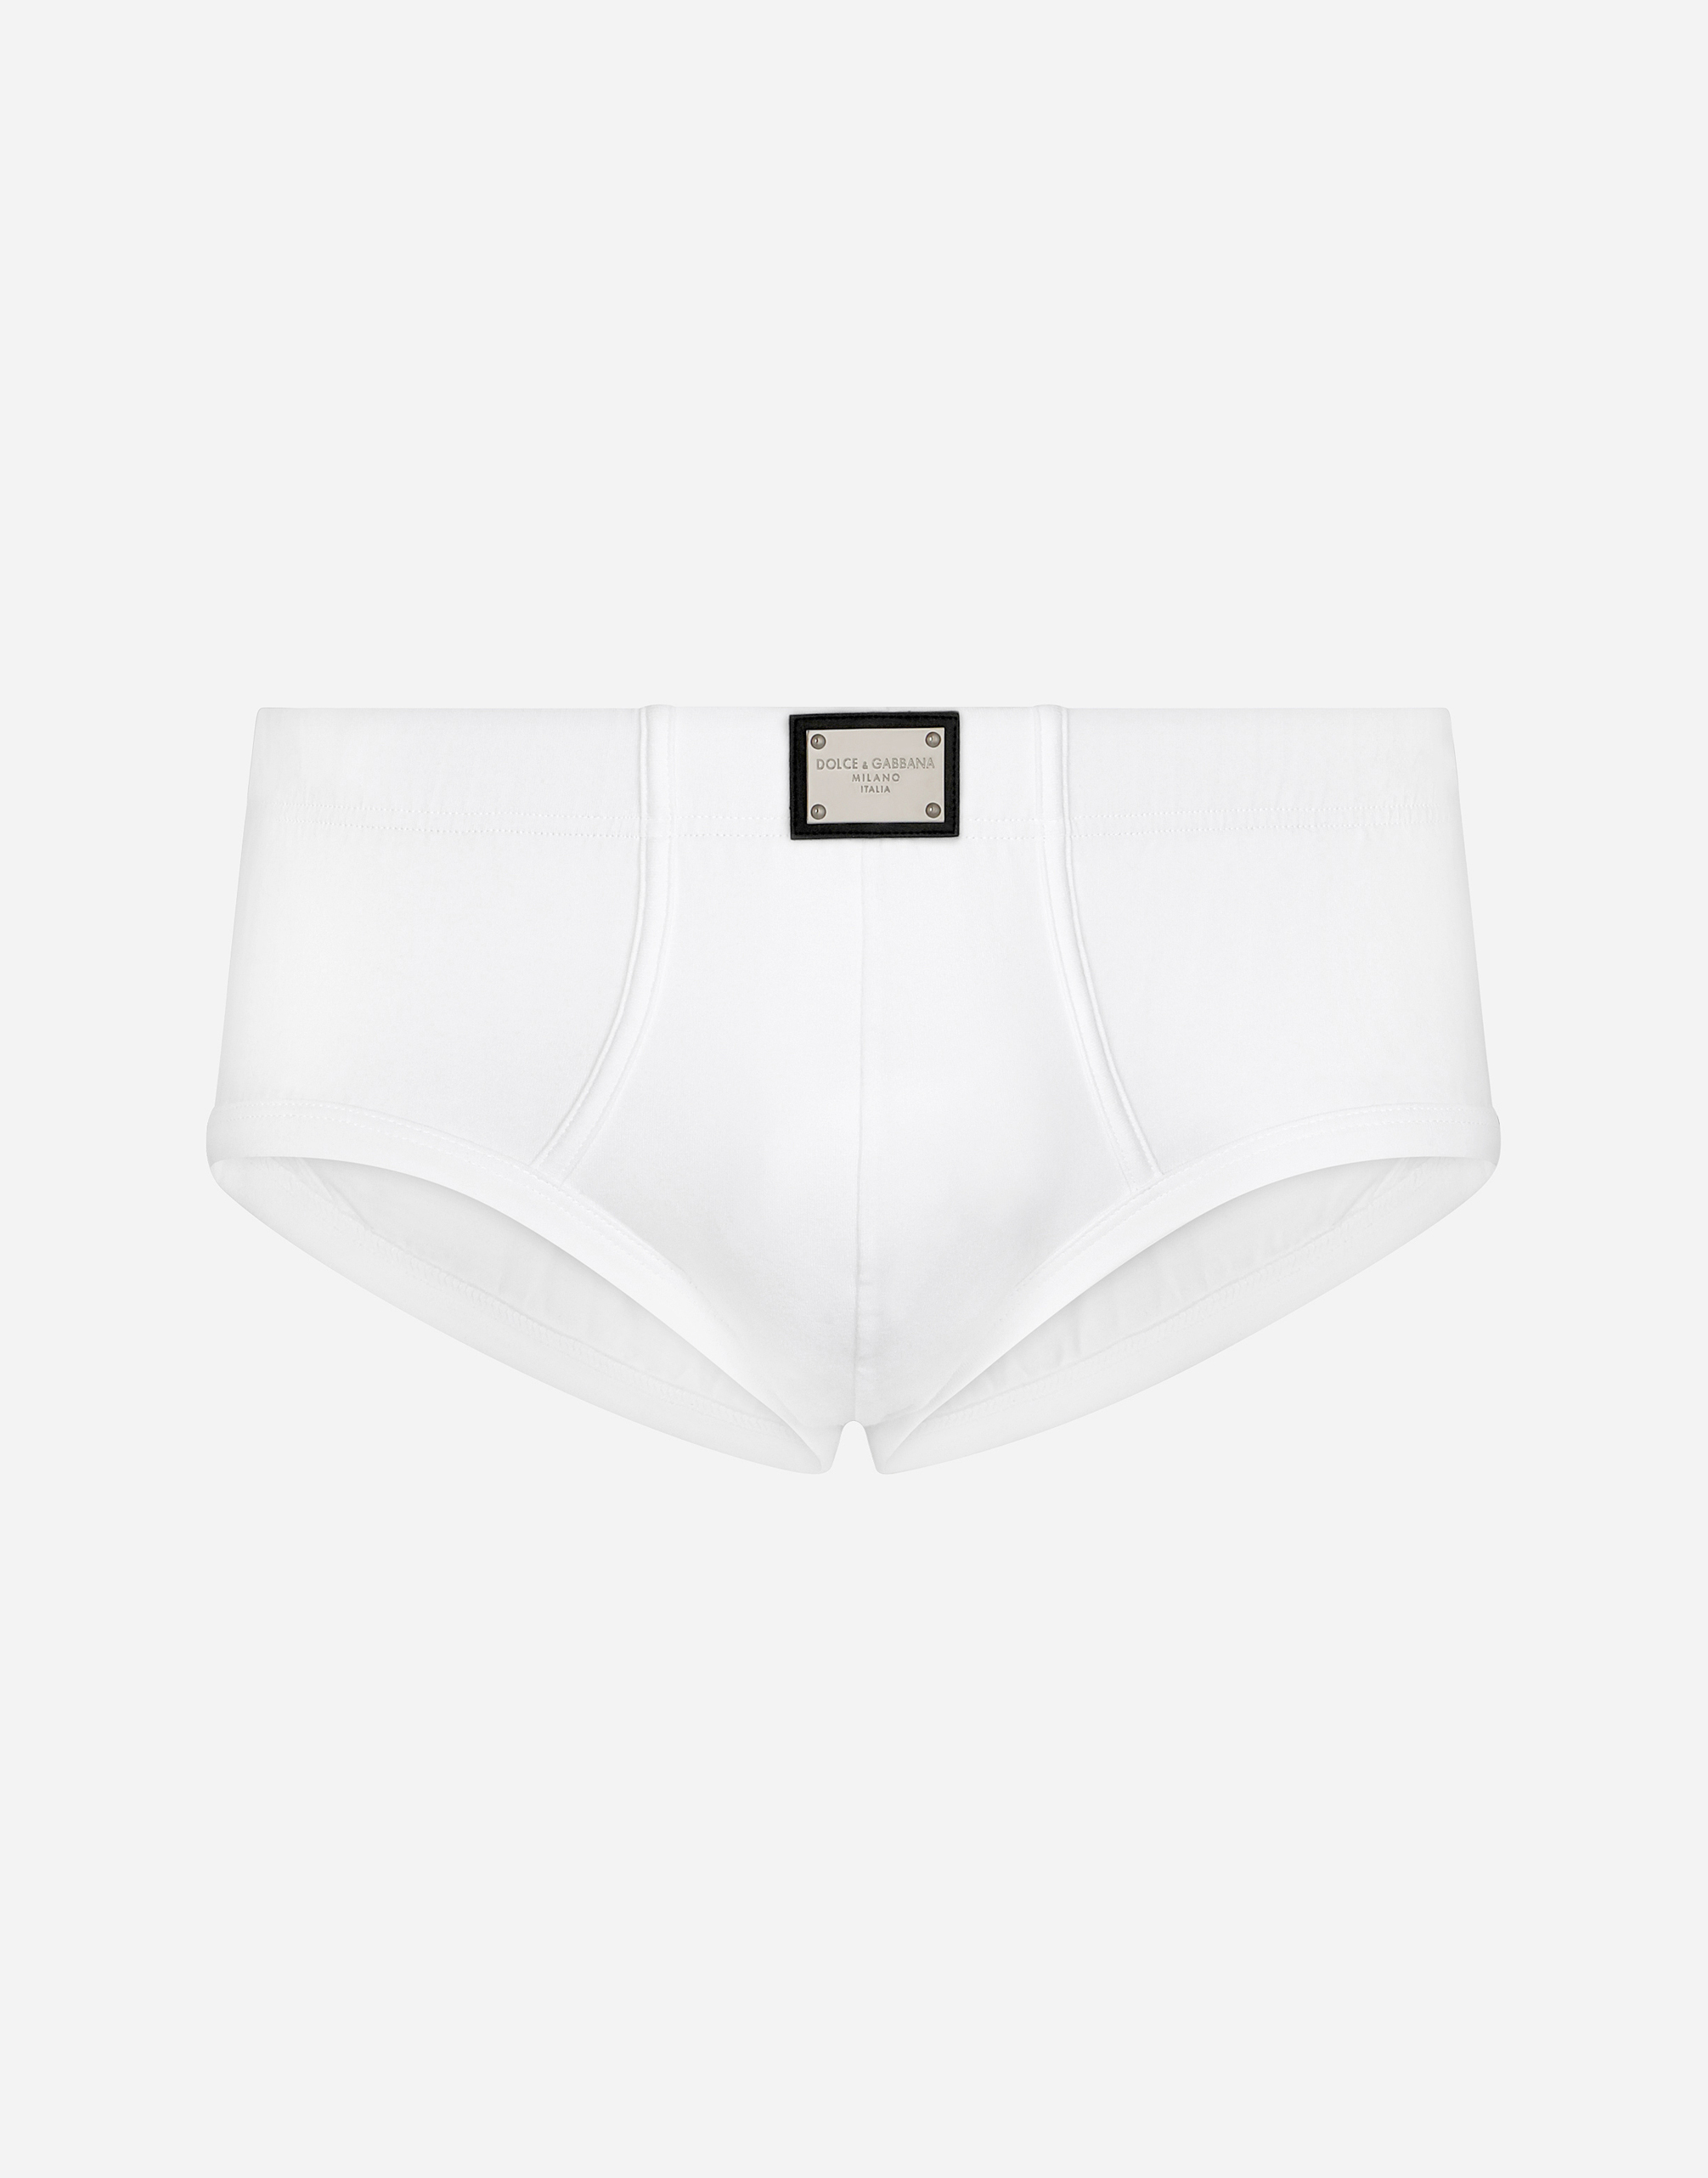 D&G DOLCE & GABBANA Underwear White Invisibility Bra Size